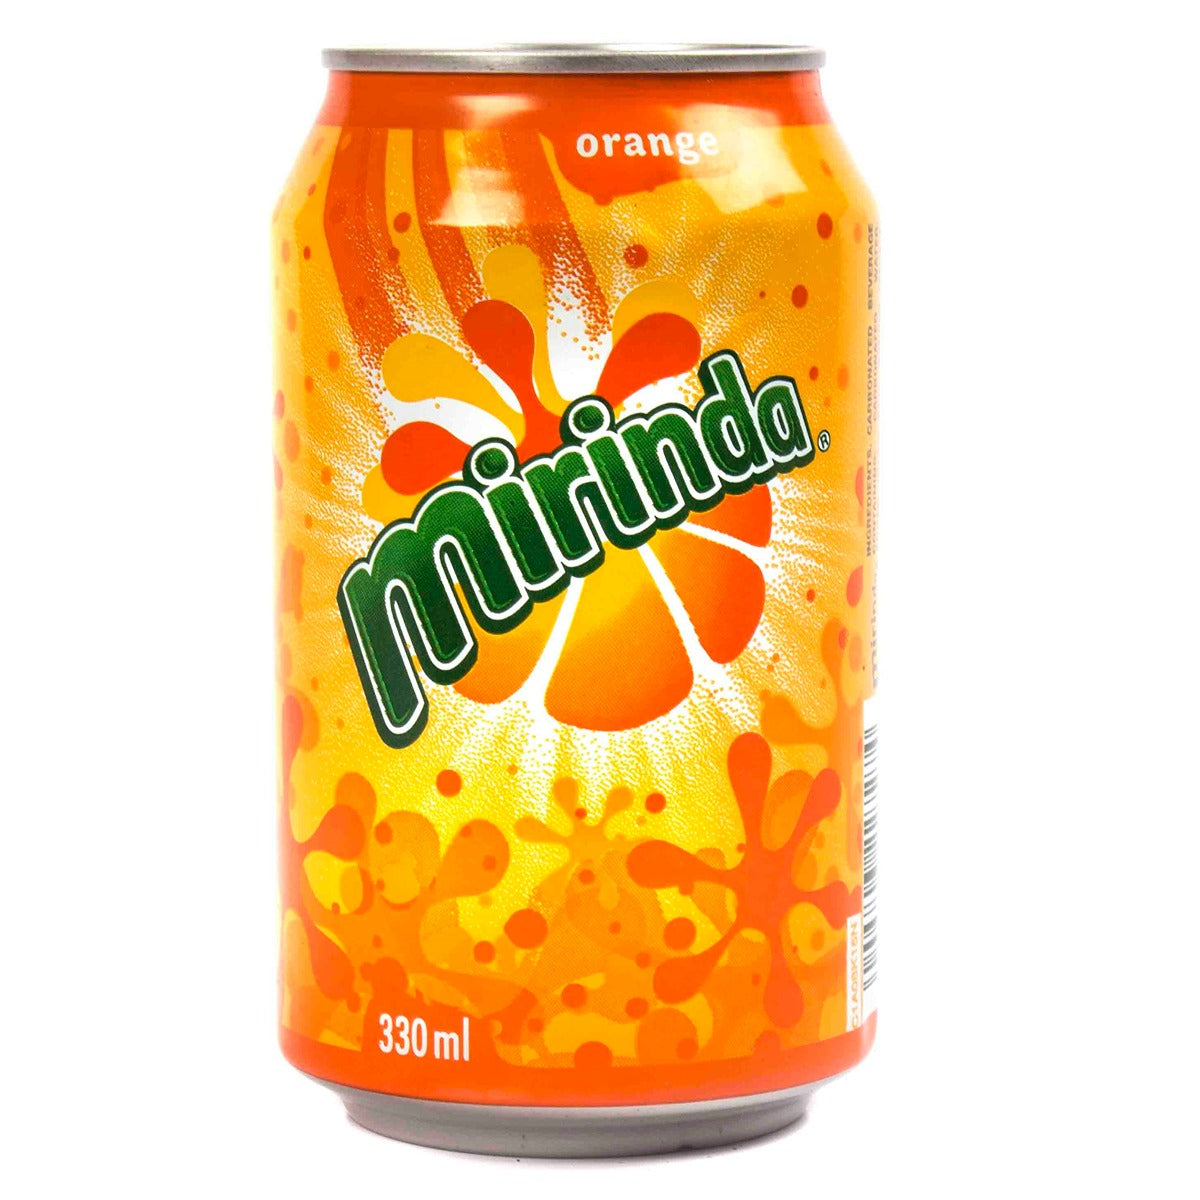 A can of Mirinda - Orange Soda - 330ml on a white background.